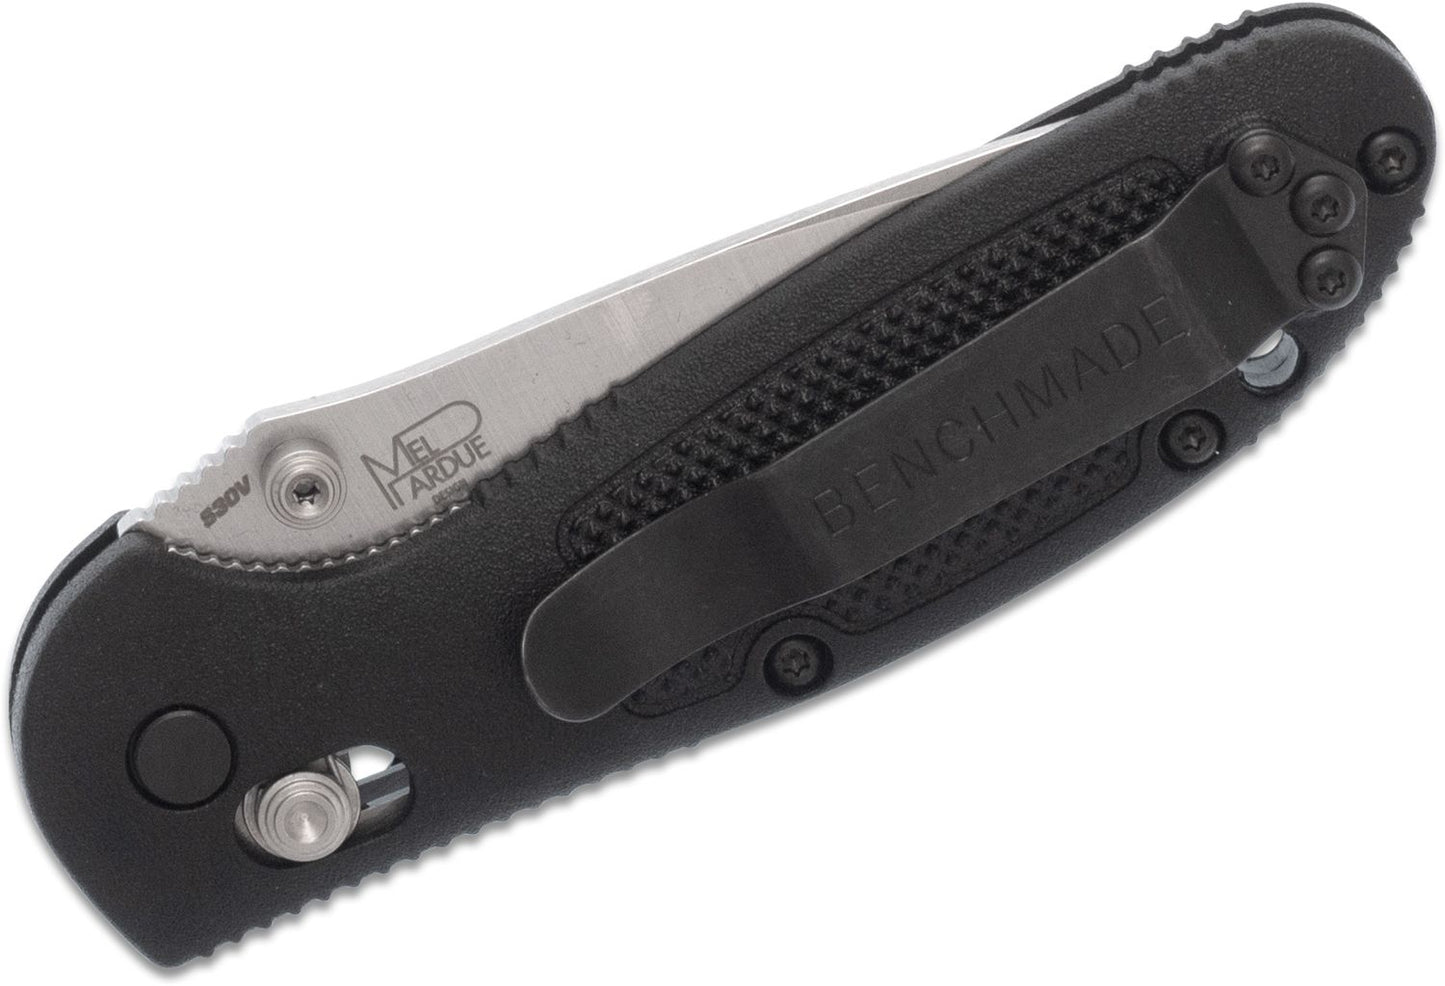 556-S30V Mini Griptilian AXIS Lock Folding Knife 2.91" S30V Satin Drop Point Plain Blade, Black Noryl GTX Handles